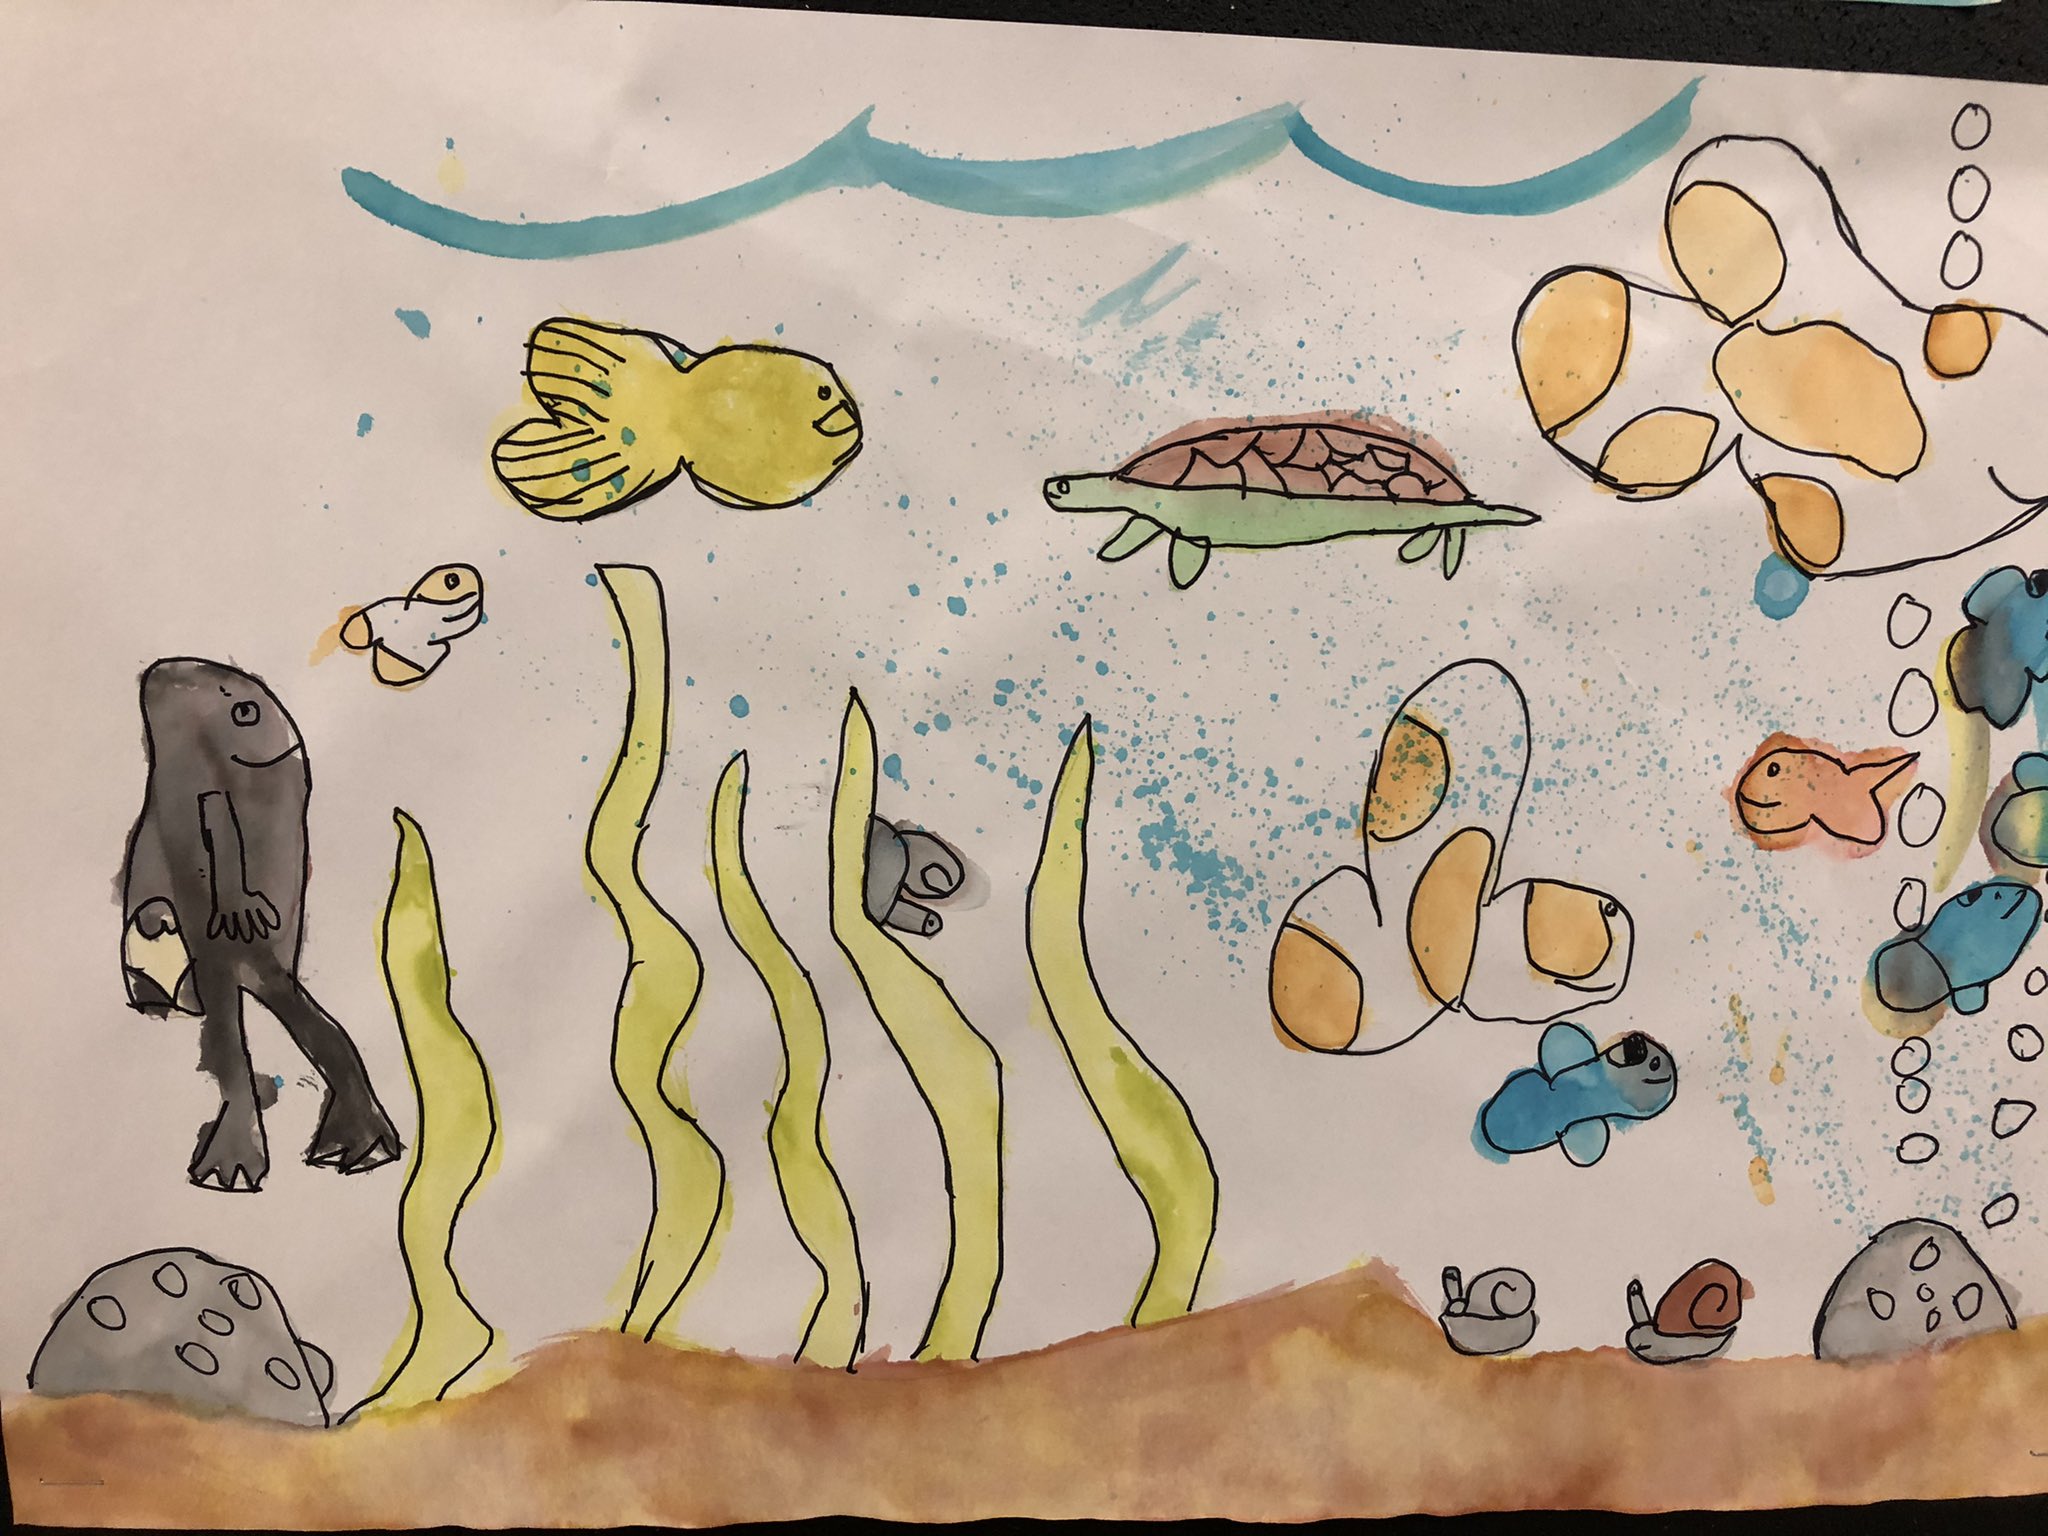 Waverley Drive PS student drawing of an aquarium